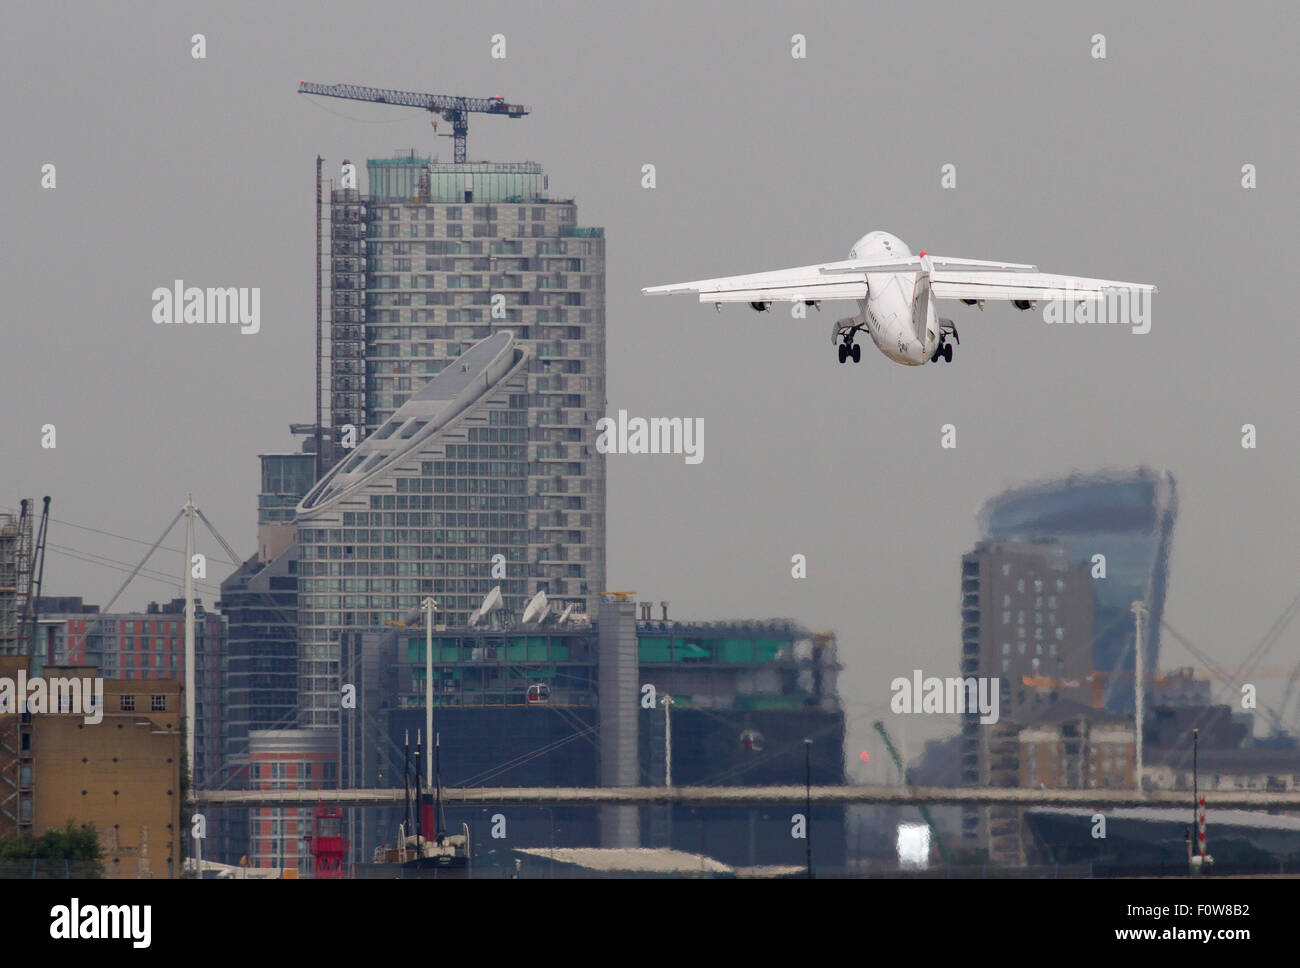 A CityJet Avro RJ85 registration EI-WXA takes off at London City Airport LCY. Stock Photo